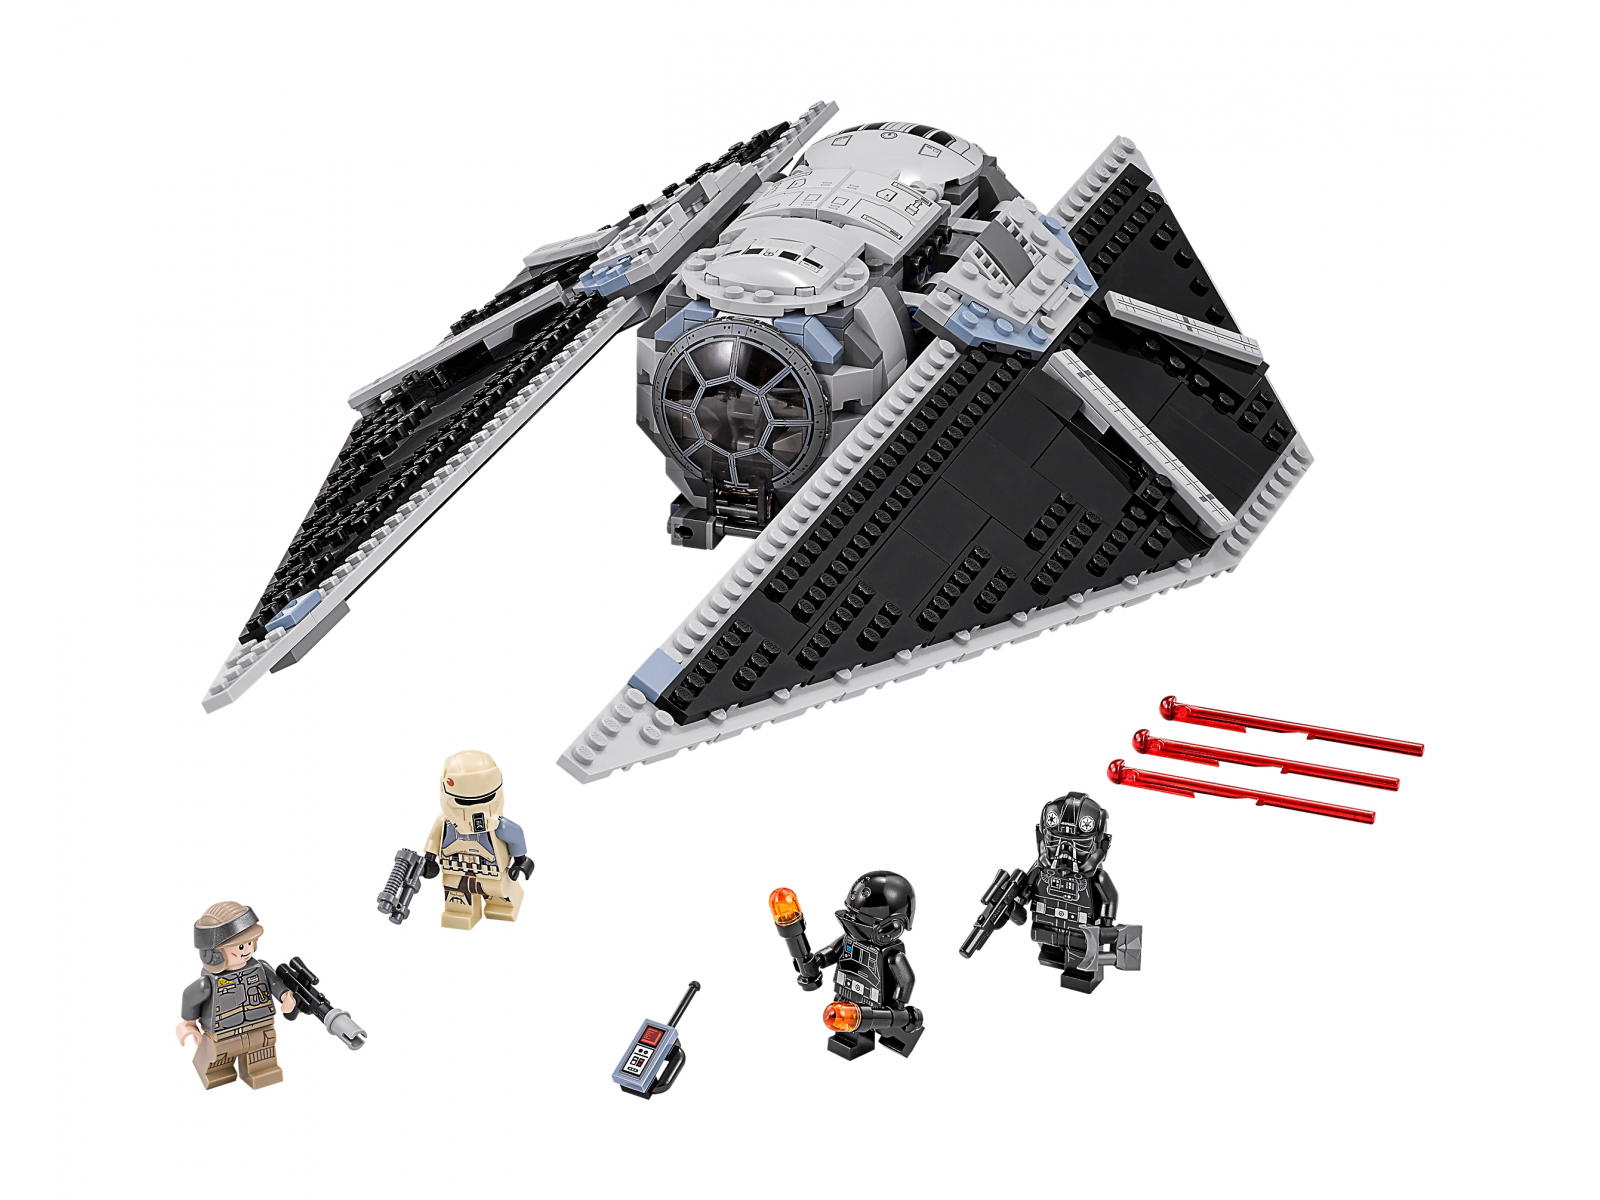 Plik:LEGO 75154 Star Wars TIE Striker.jpg